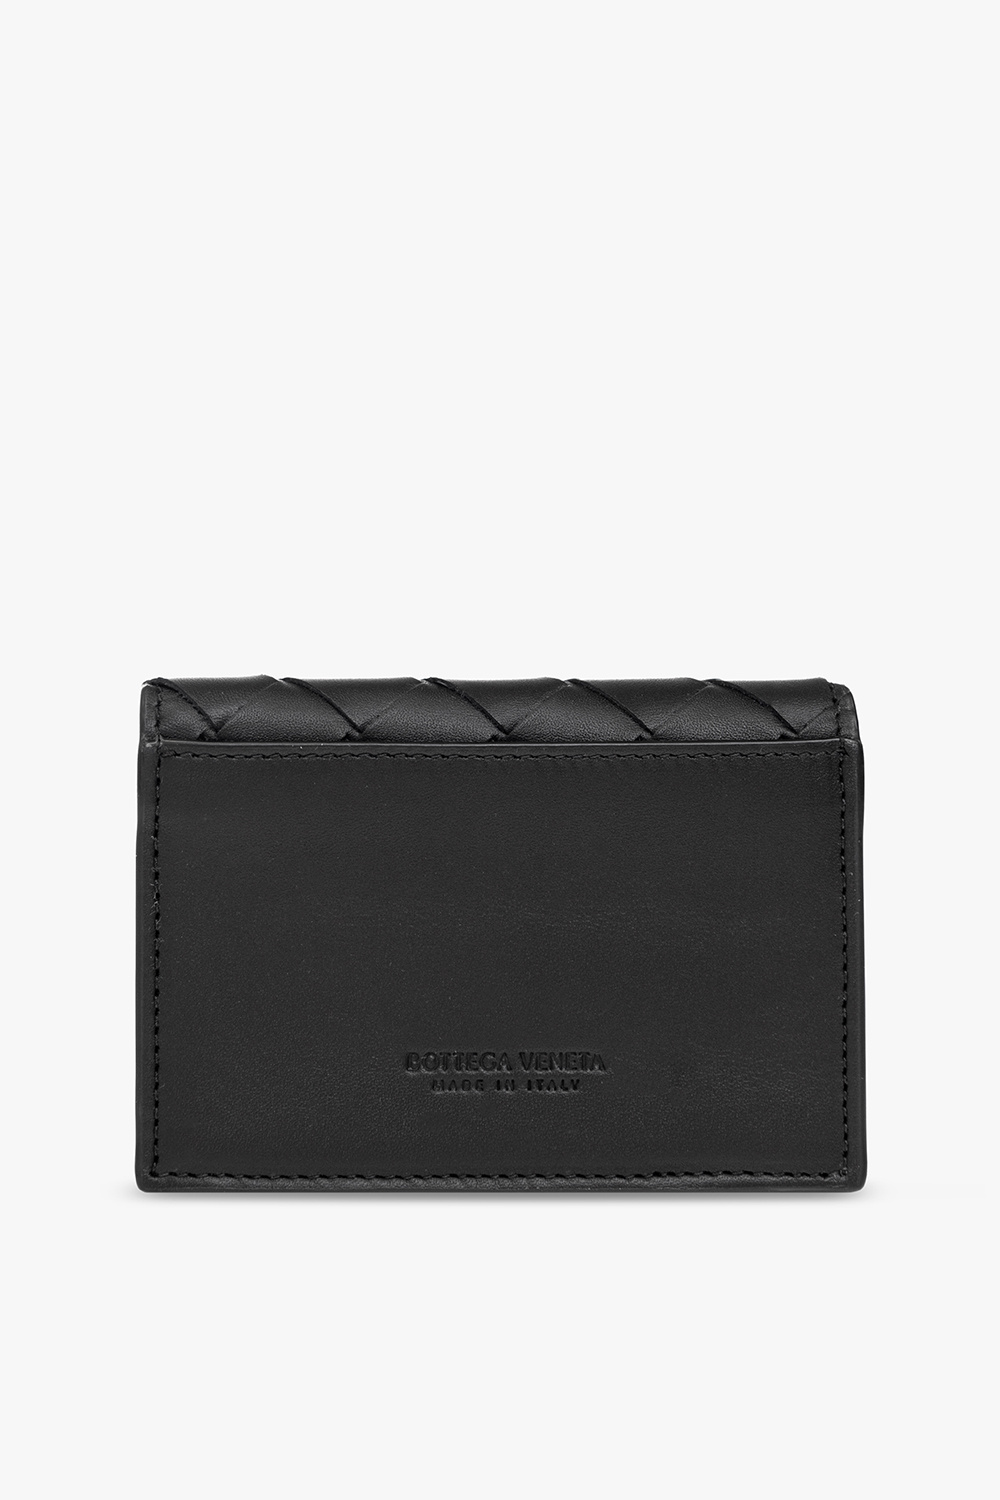 Bottega Veneta Leather business card case